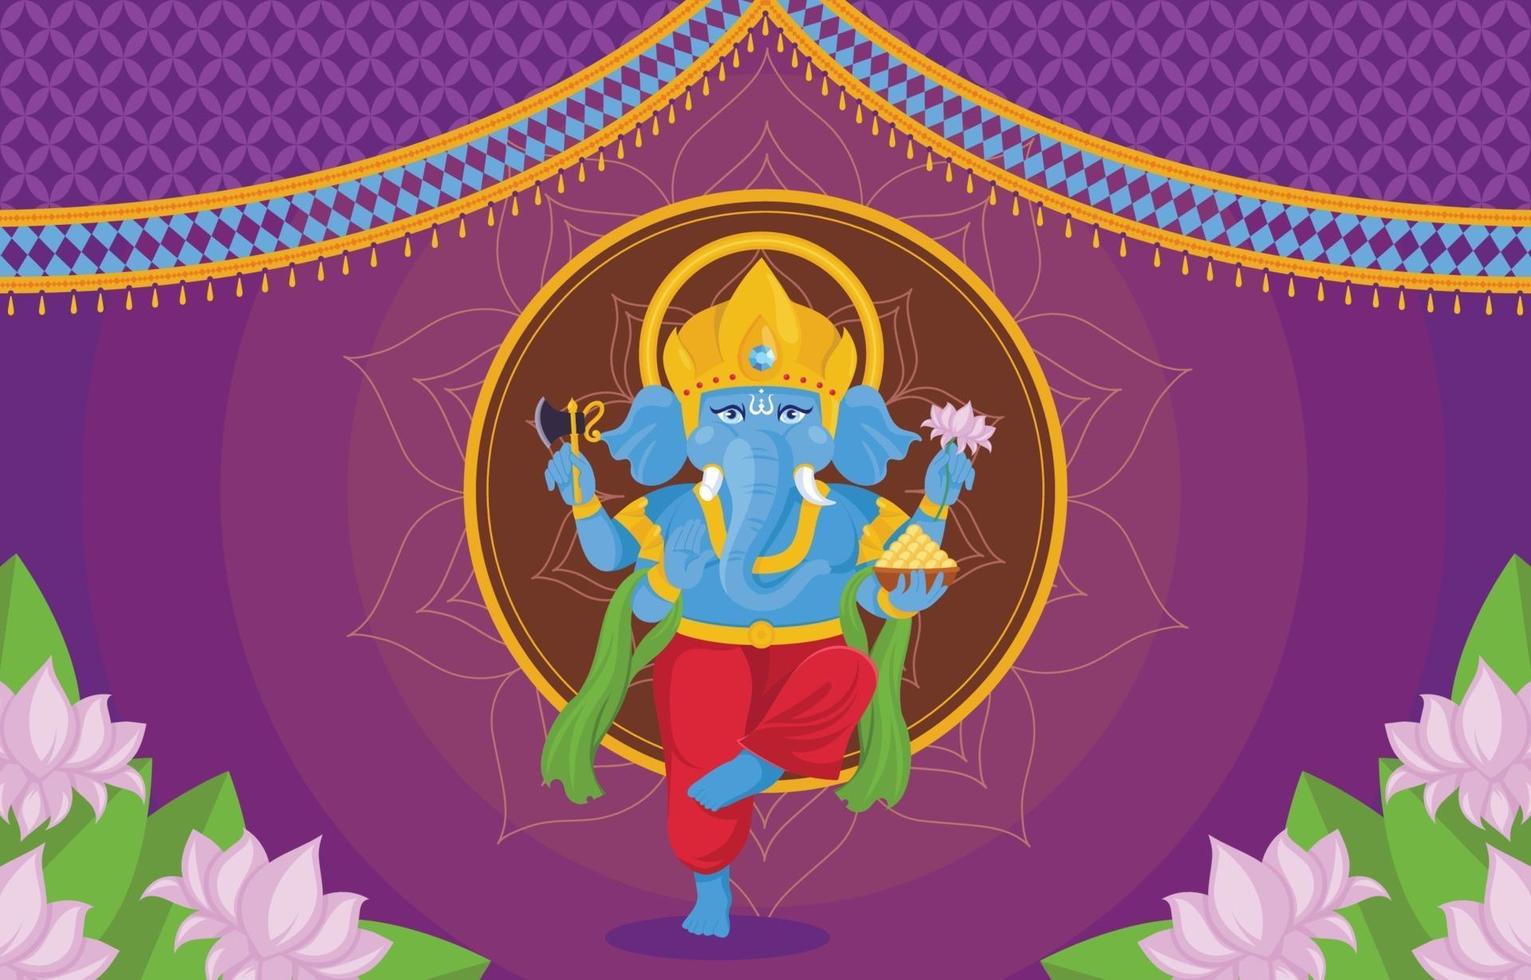 ganesh chaturthi festival achtergrond vector